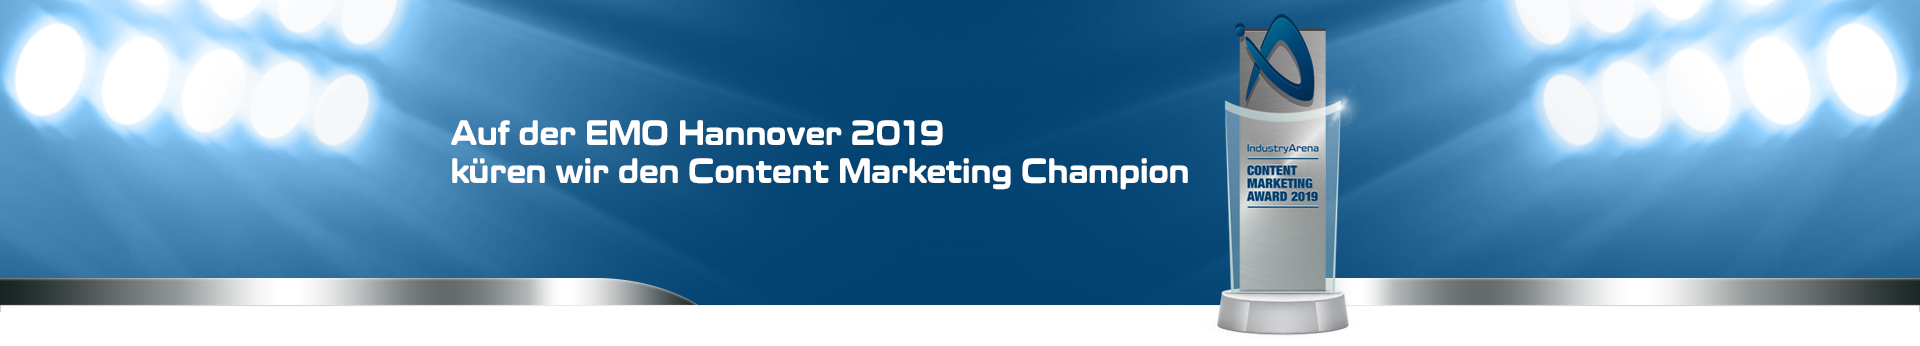 IndustryArena Content Marketing Award 2019